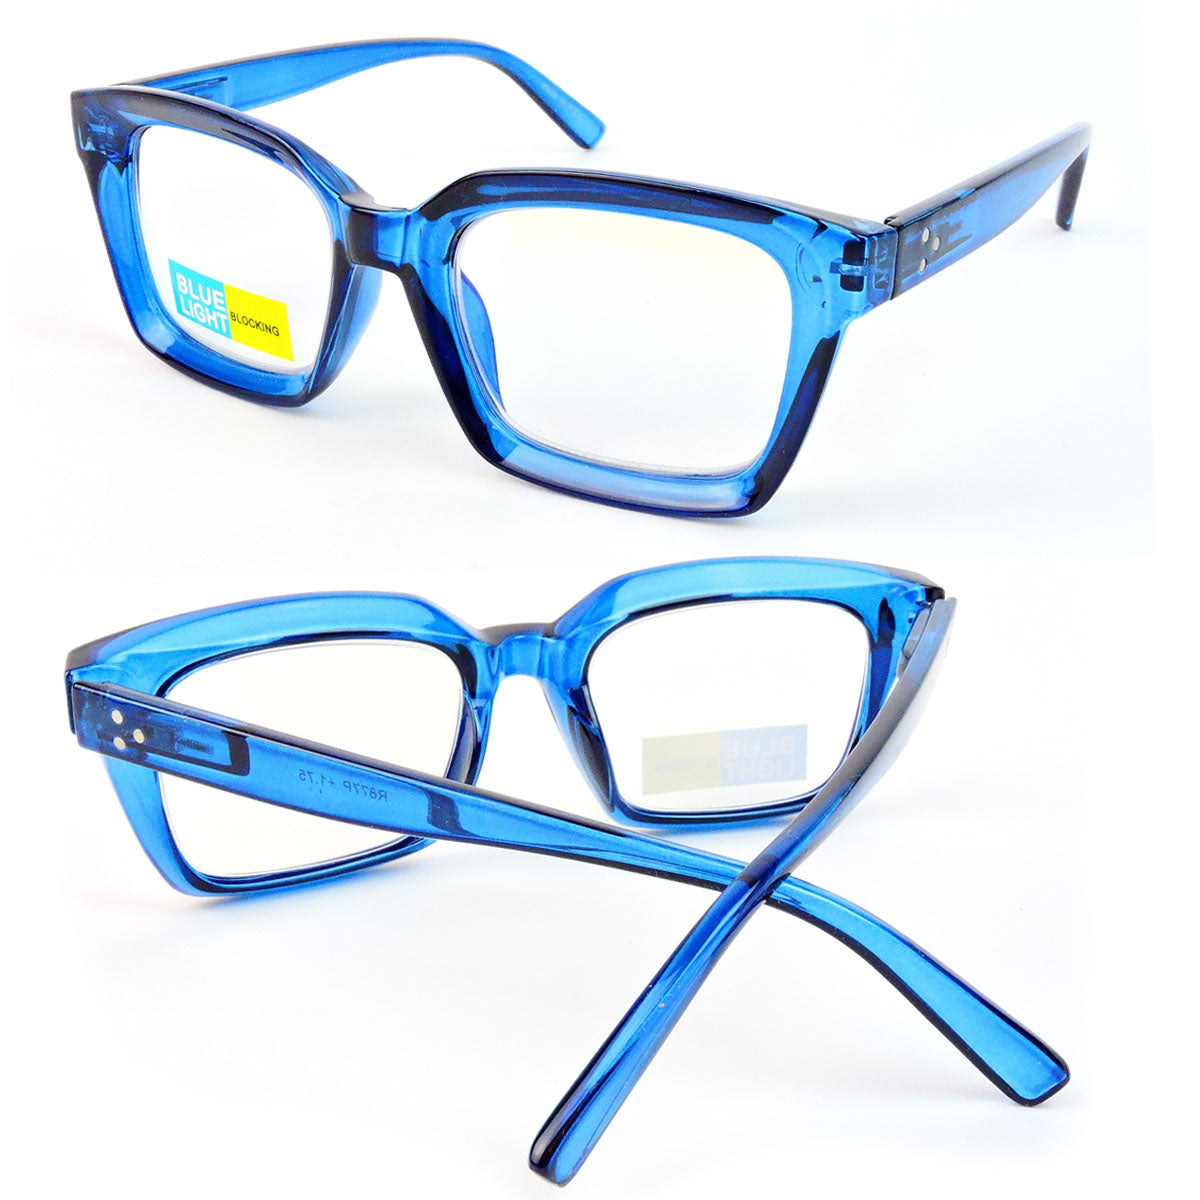 Blue Light Blocking Glasses Thick Rectangle Preppy Look - Reading Glasses - Blue, +1.75